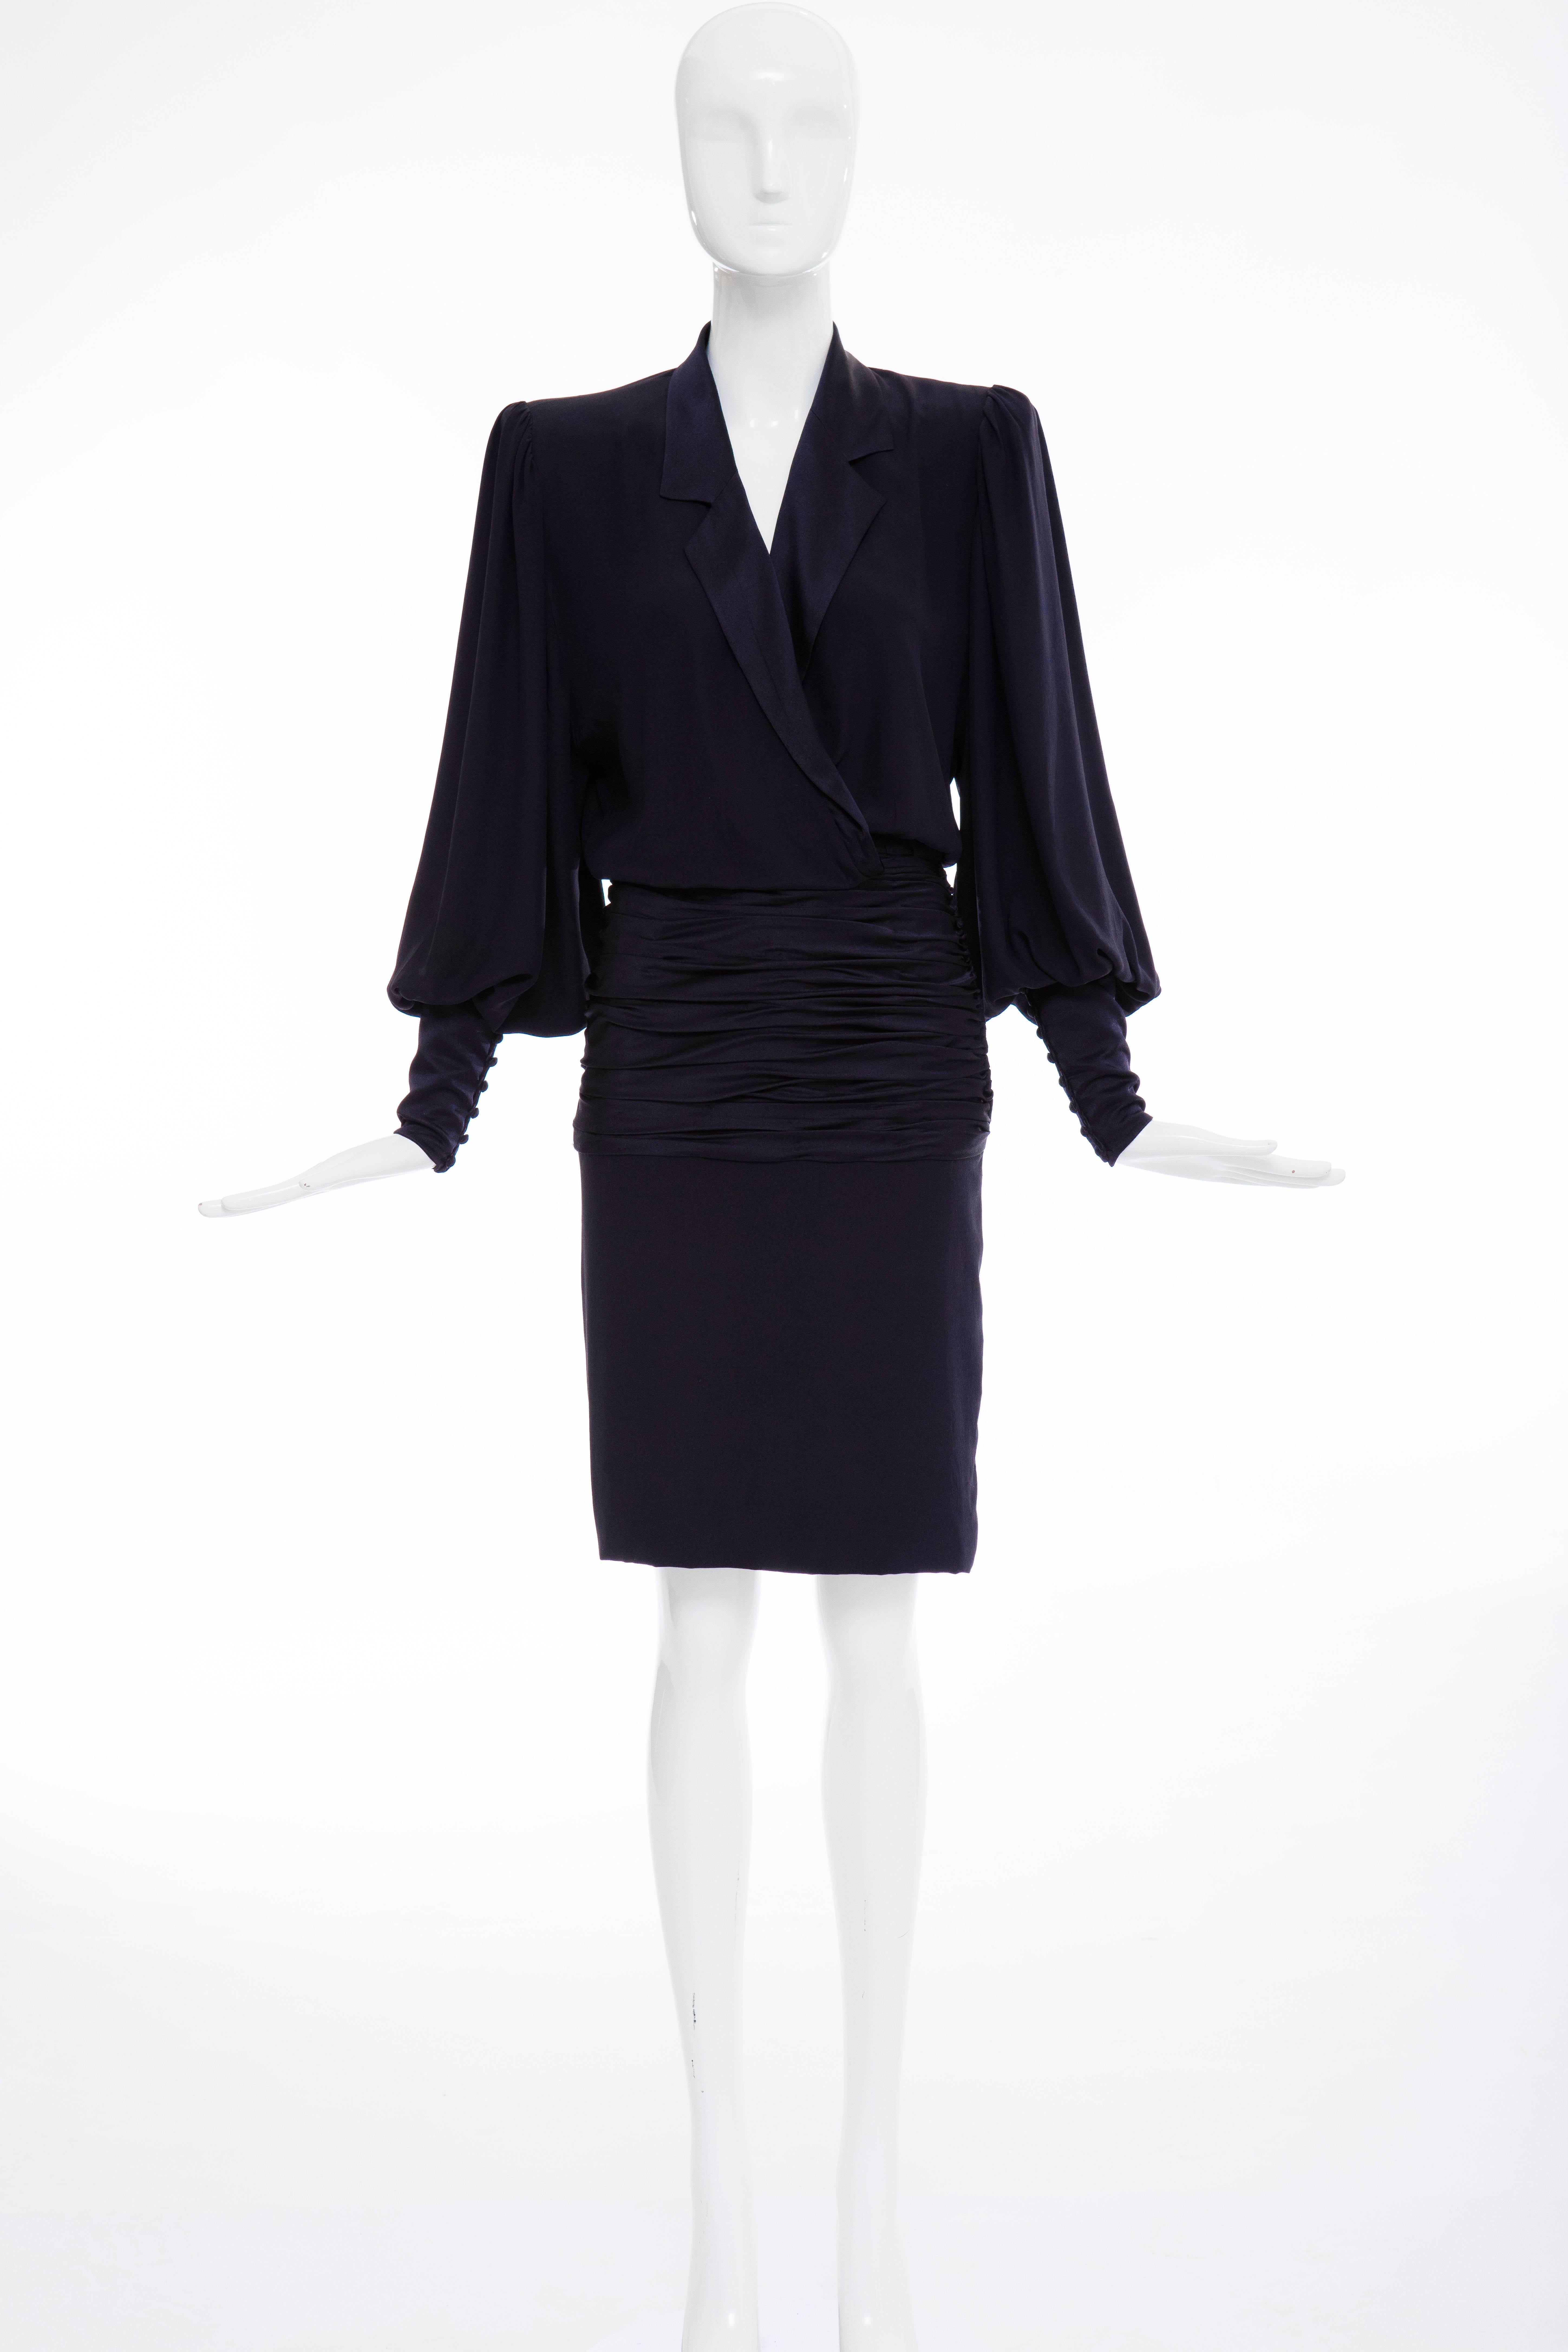 Black Jean - Louis Scherrer Haute Couture Navy Silk Crepe & Satin Dress, Circa 1980's For Sale